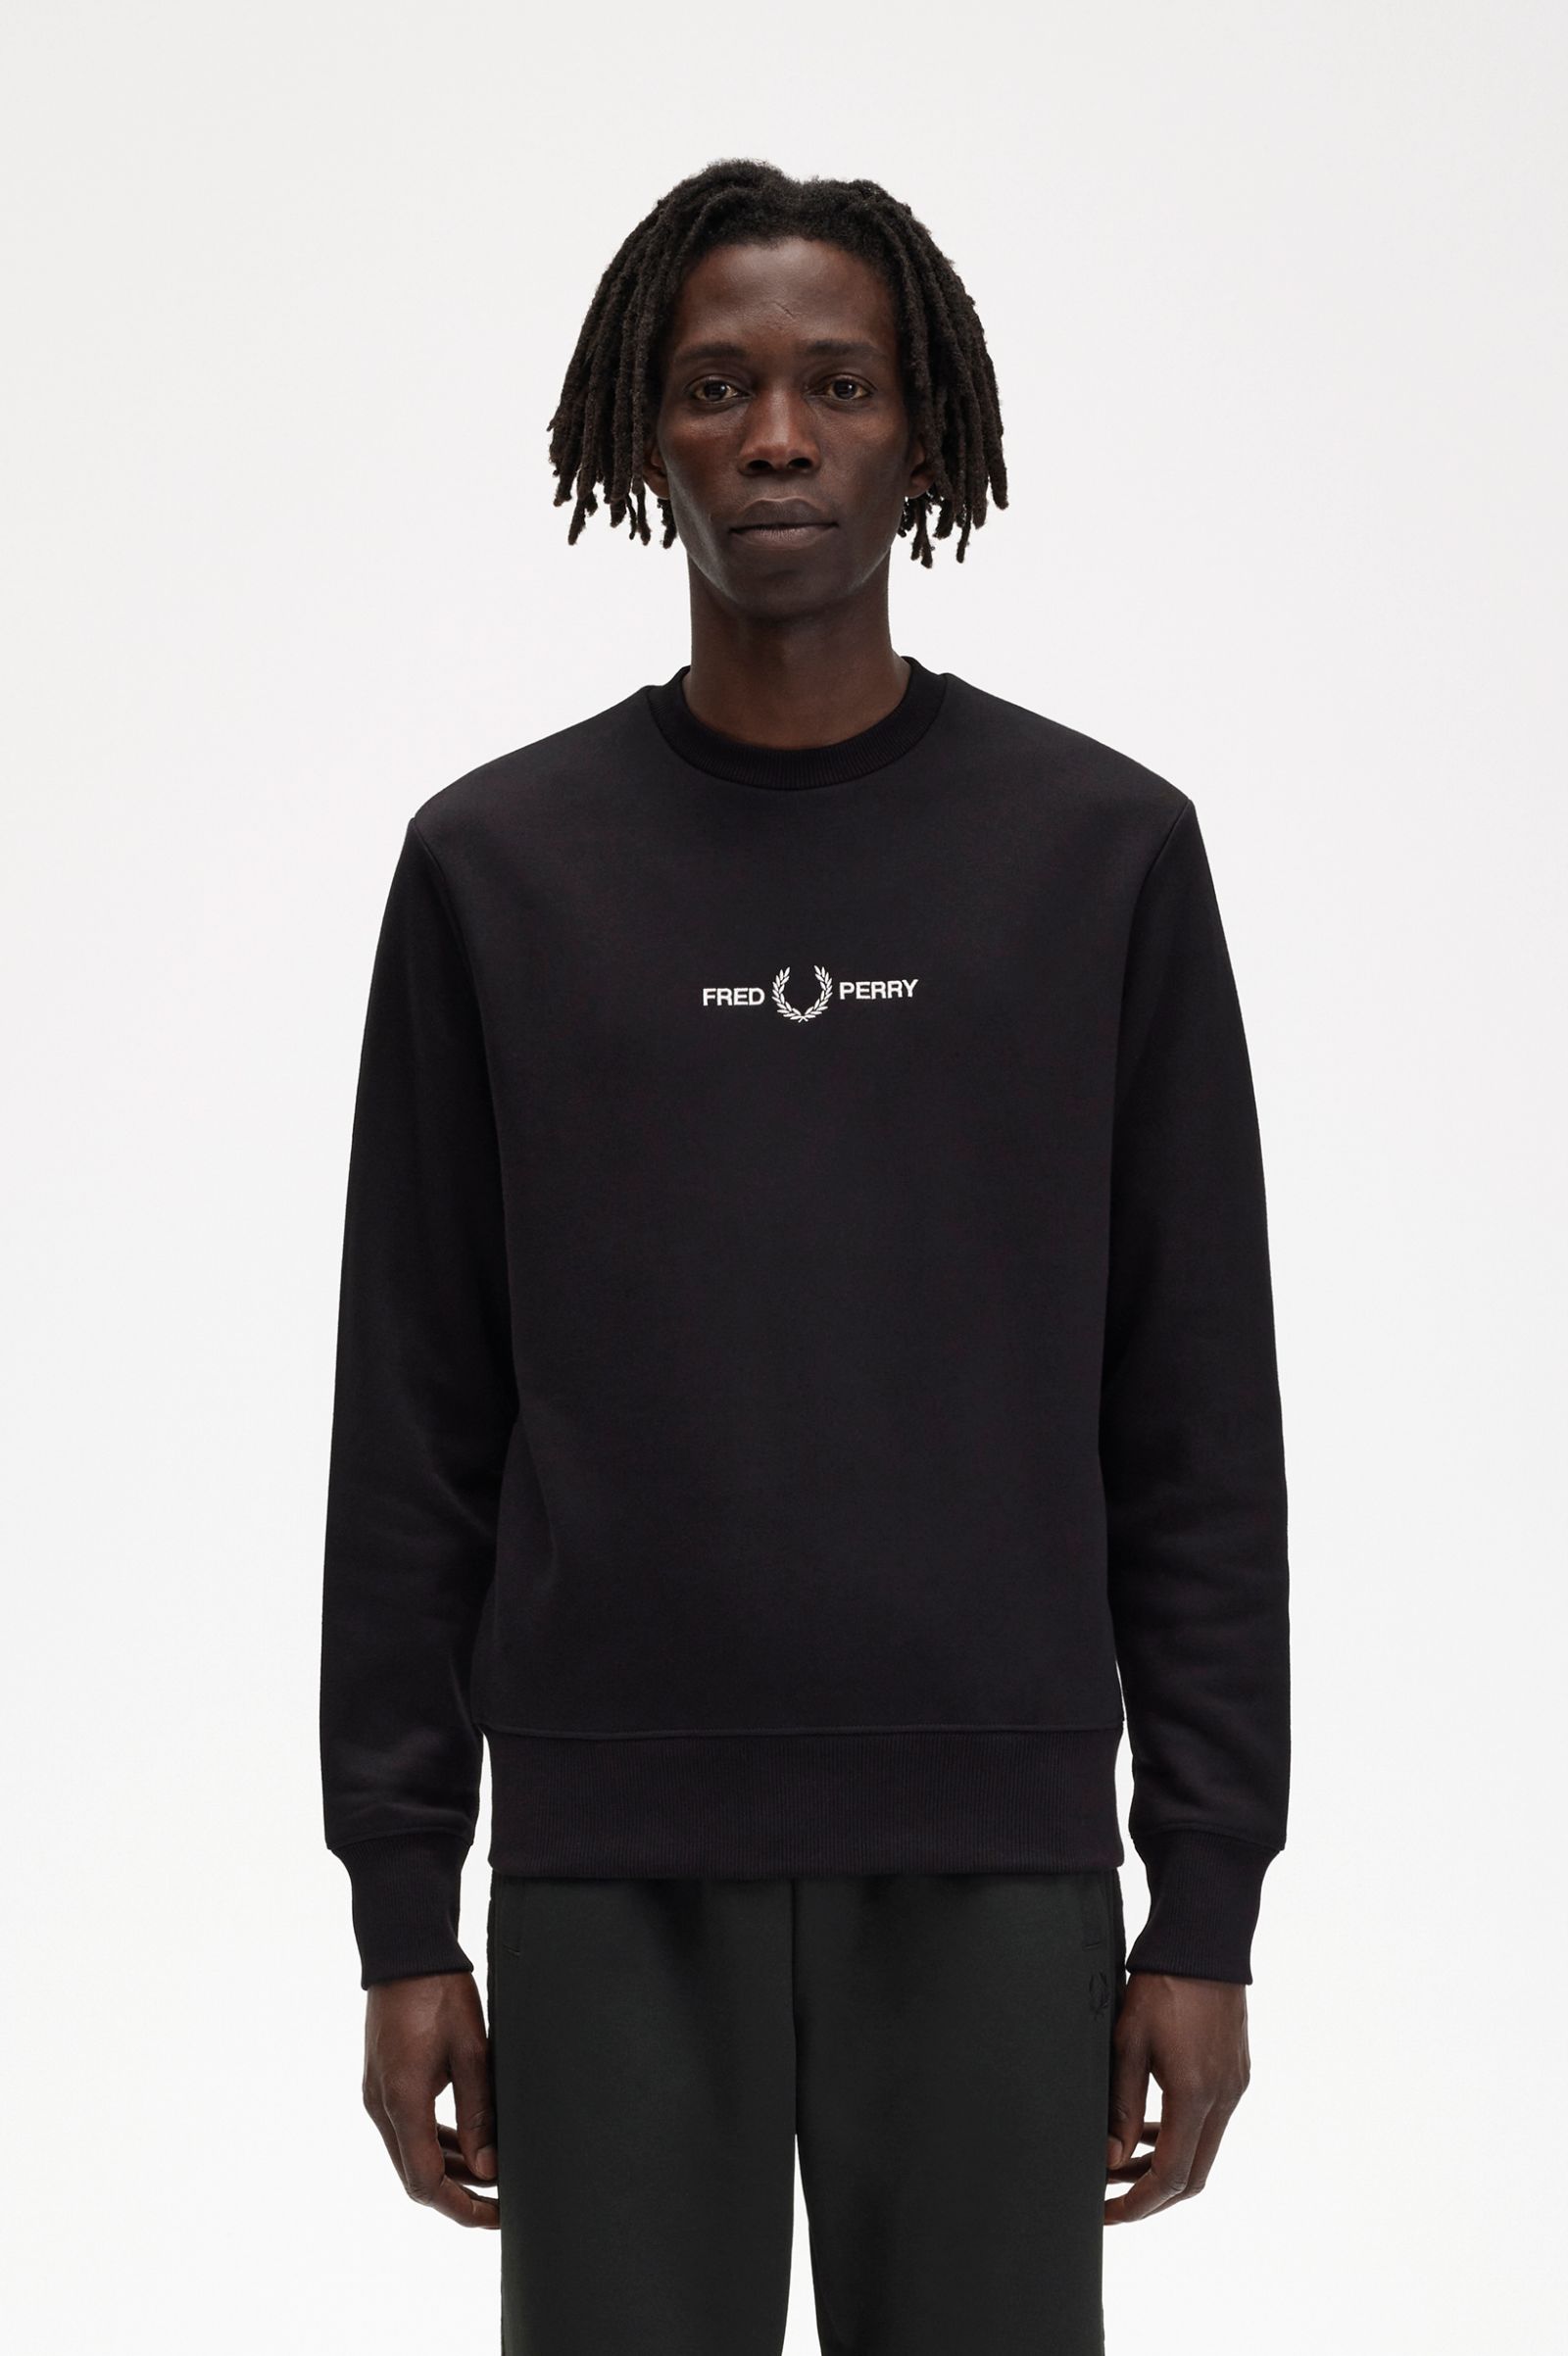 Barrie embroidered panelled sweatshirt - Black